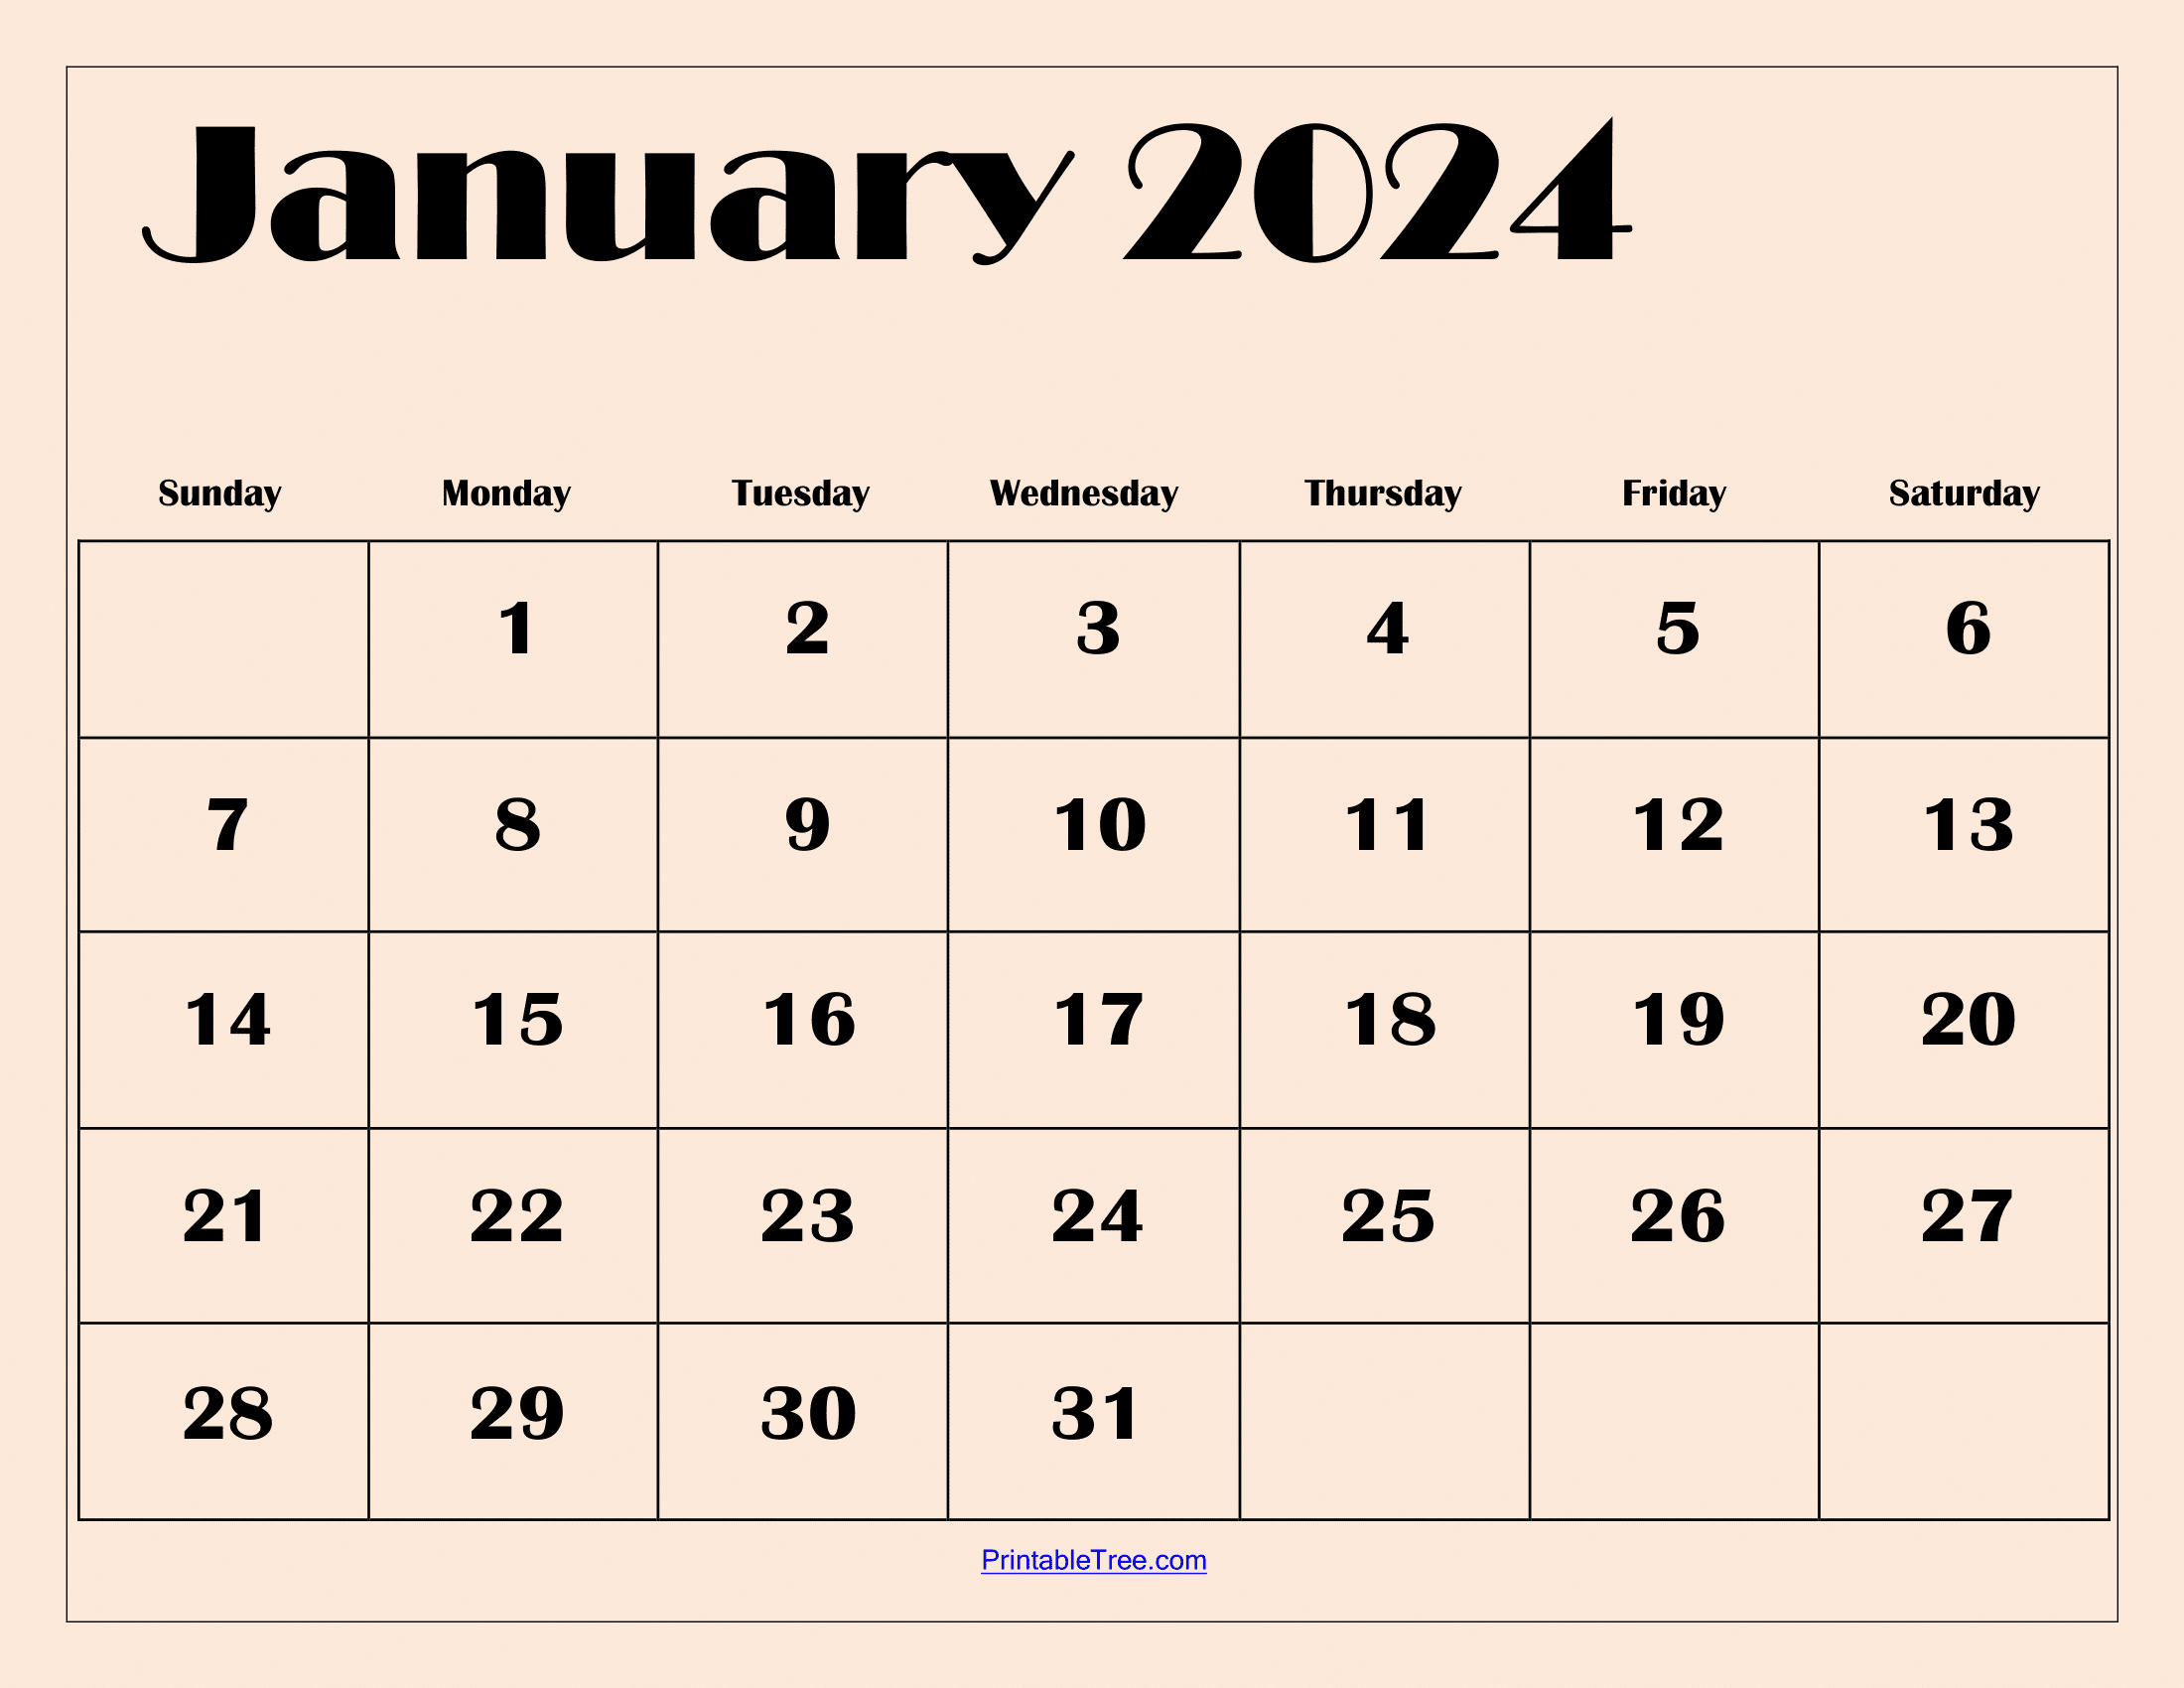 January 2024 Calendar Printable Pdf Template With Holidays | Year 2024 January Calendar